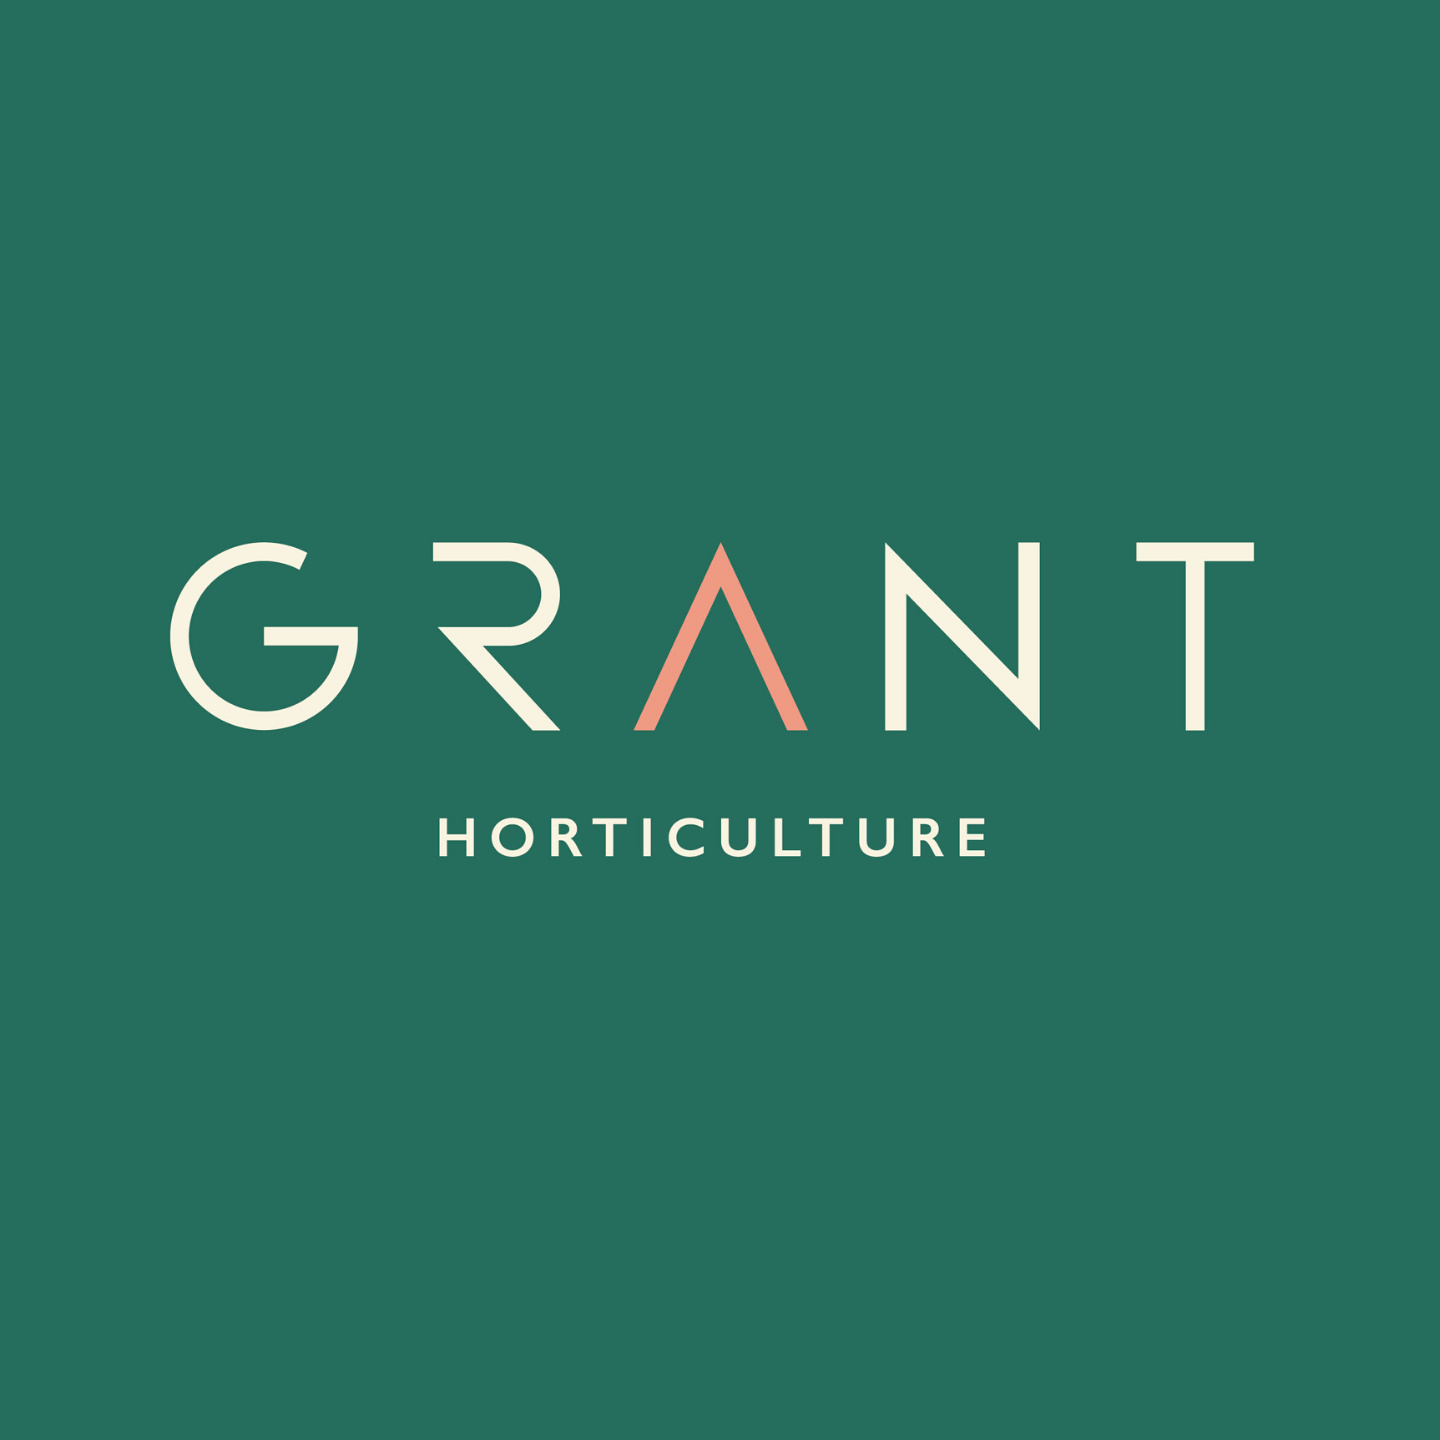 Grant Horticulture Logo